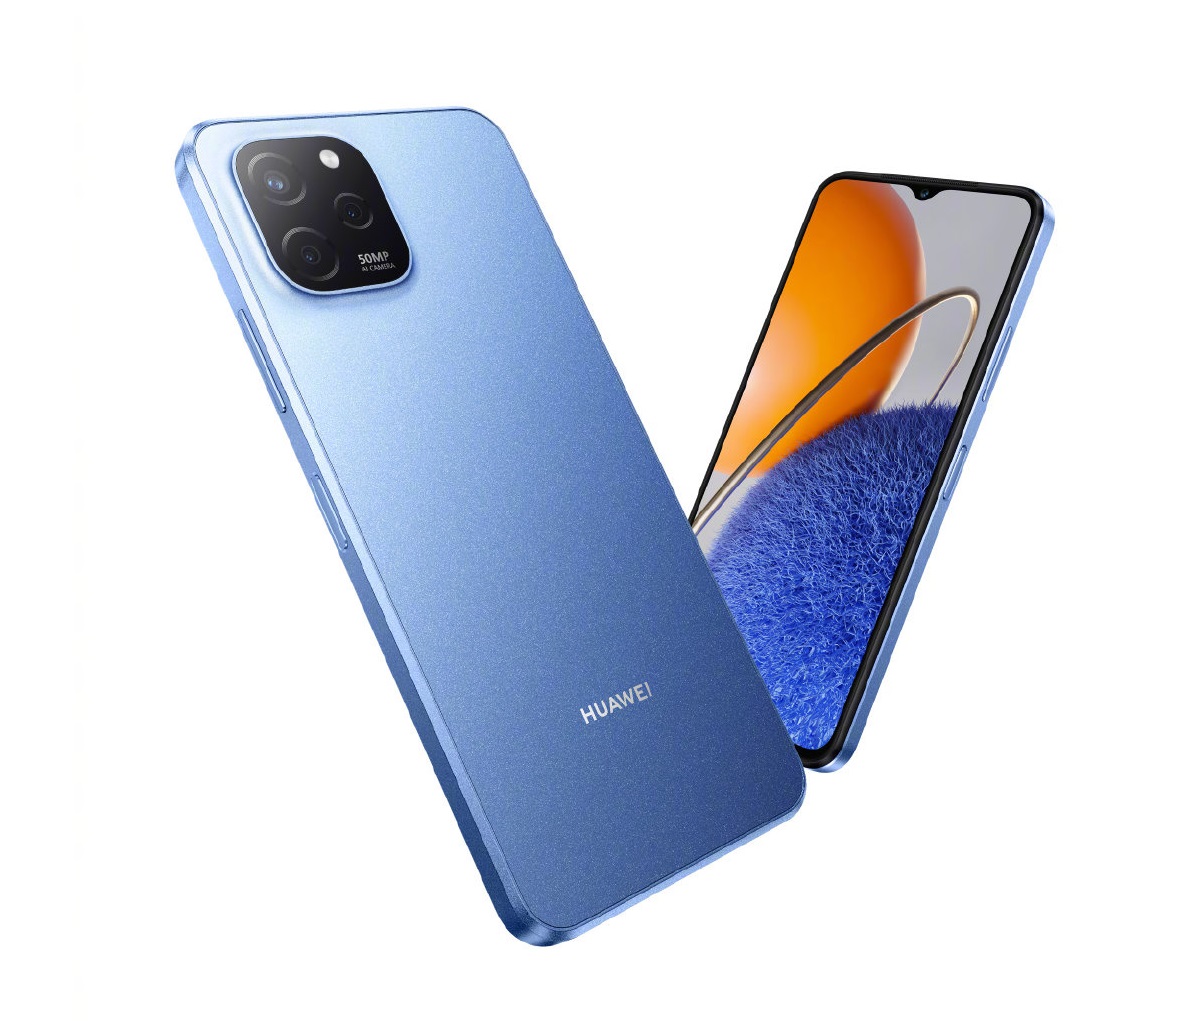 Huawei Enjoy 50z